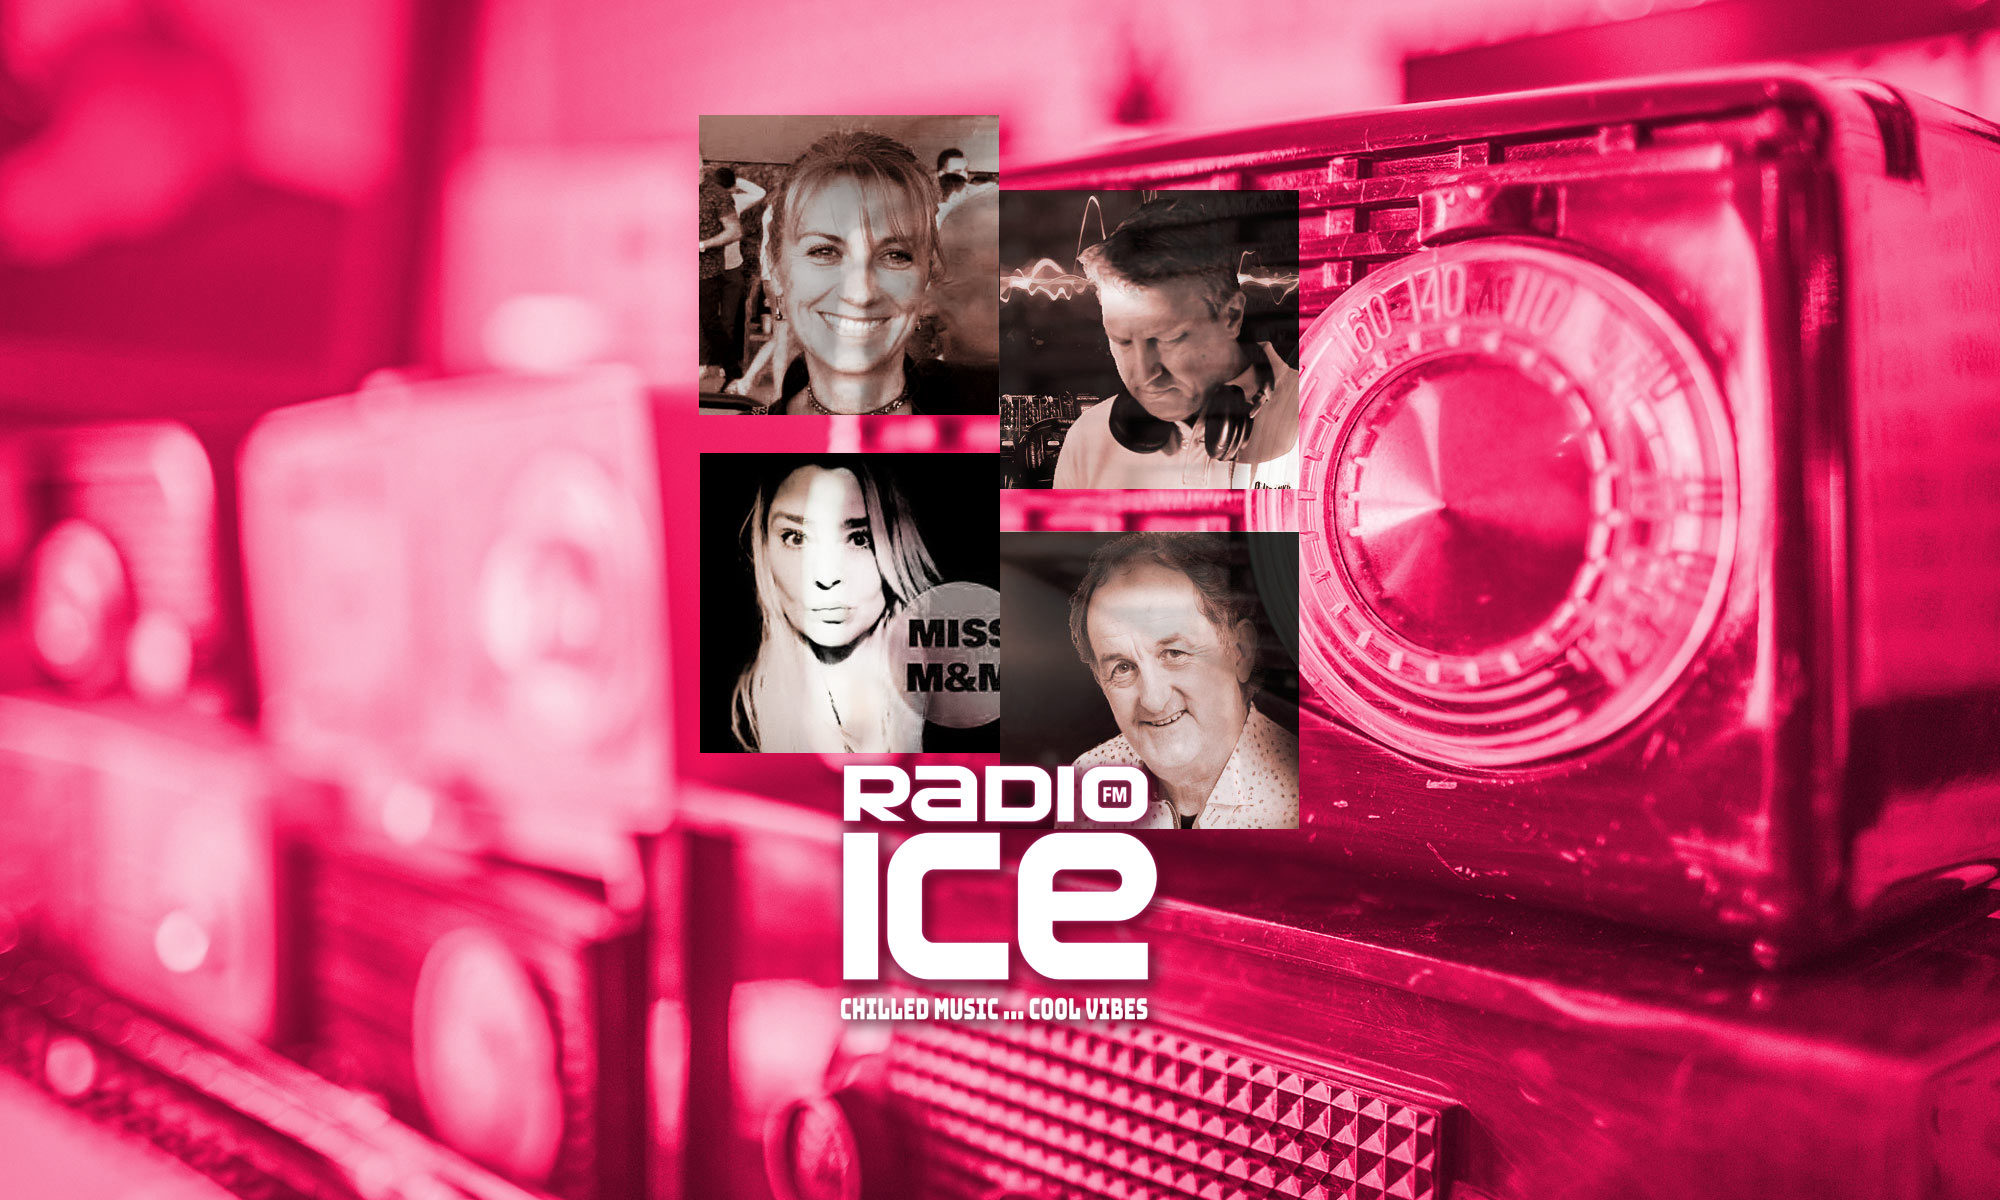 DJ Producers and Presenters at Radio Ice FM.com